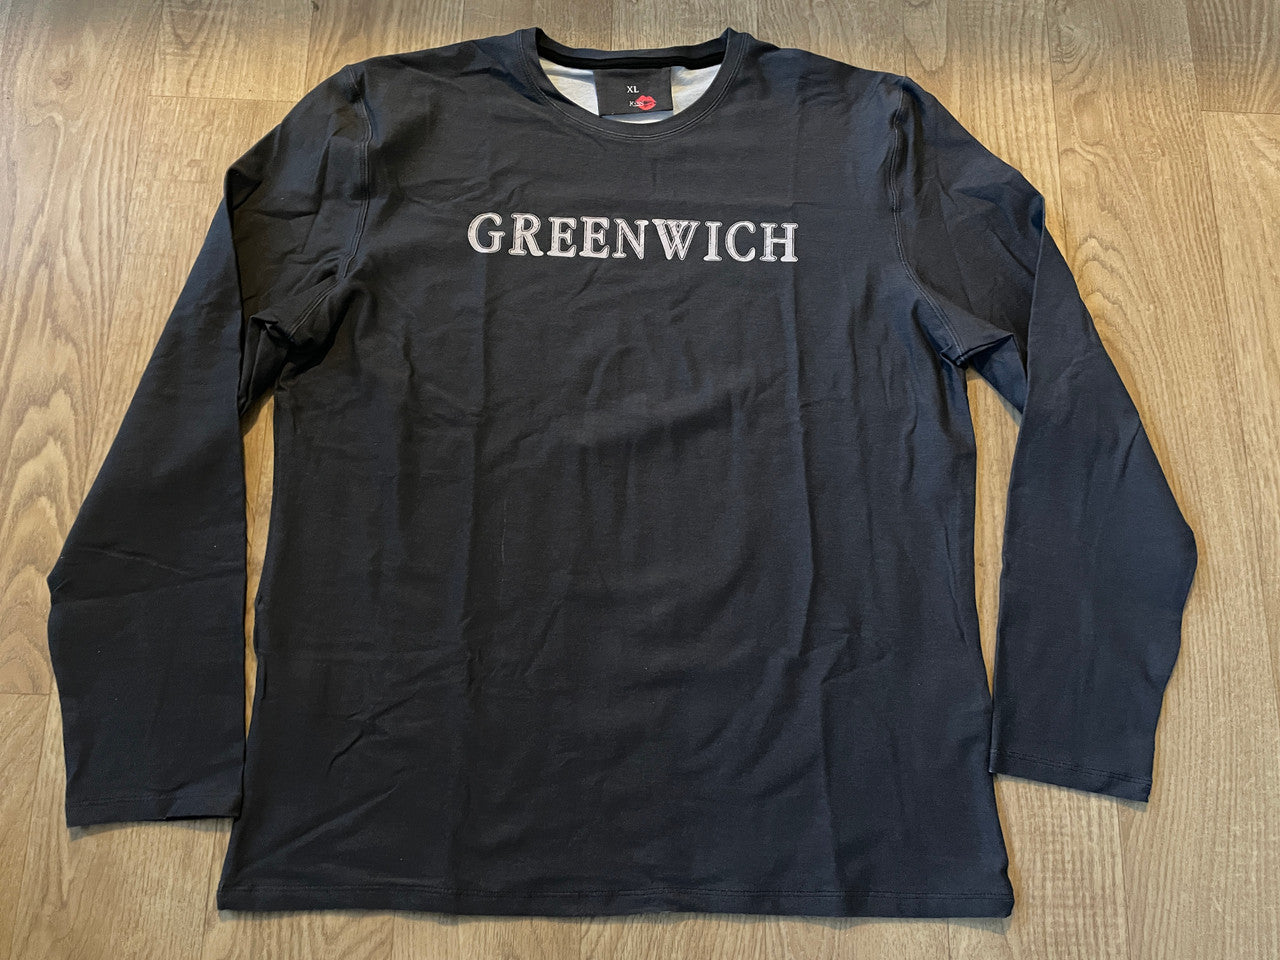 Greenwich KiSS Long Sleeved T-Shirt - New York The Village - Joey Tribbiani Friends